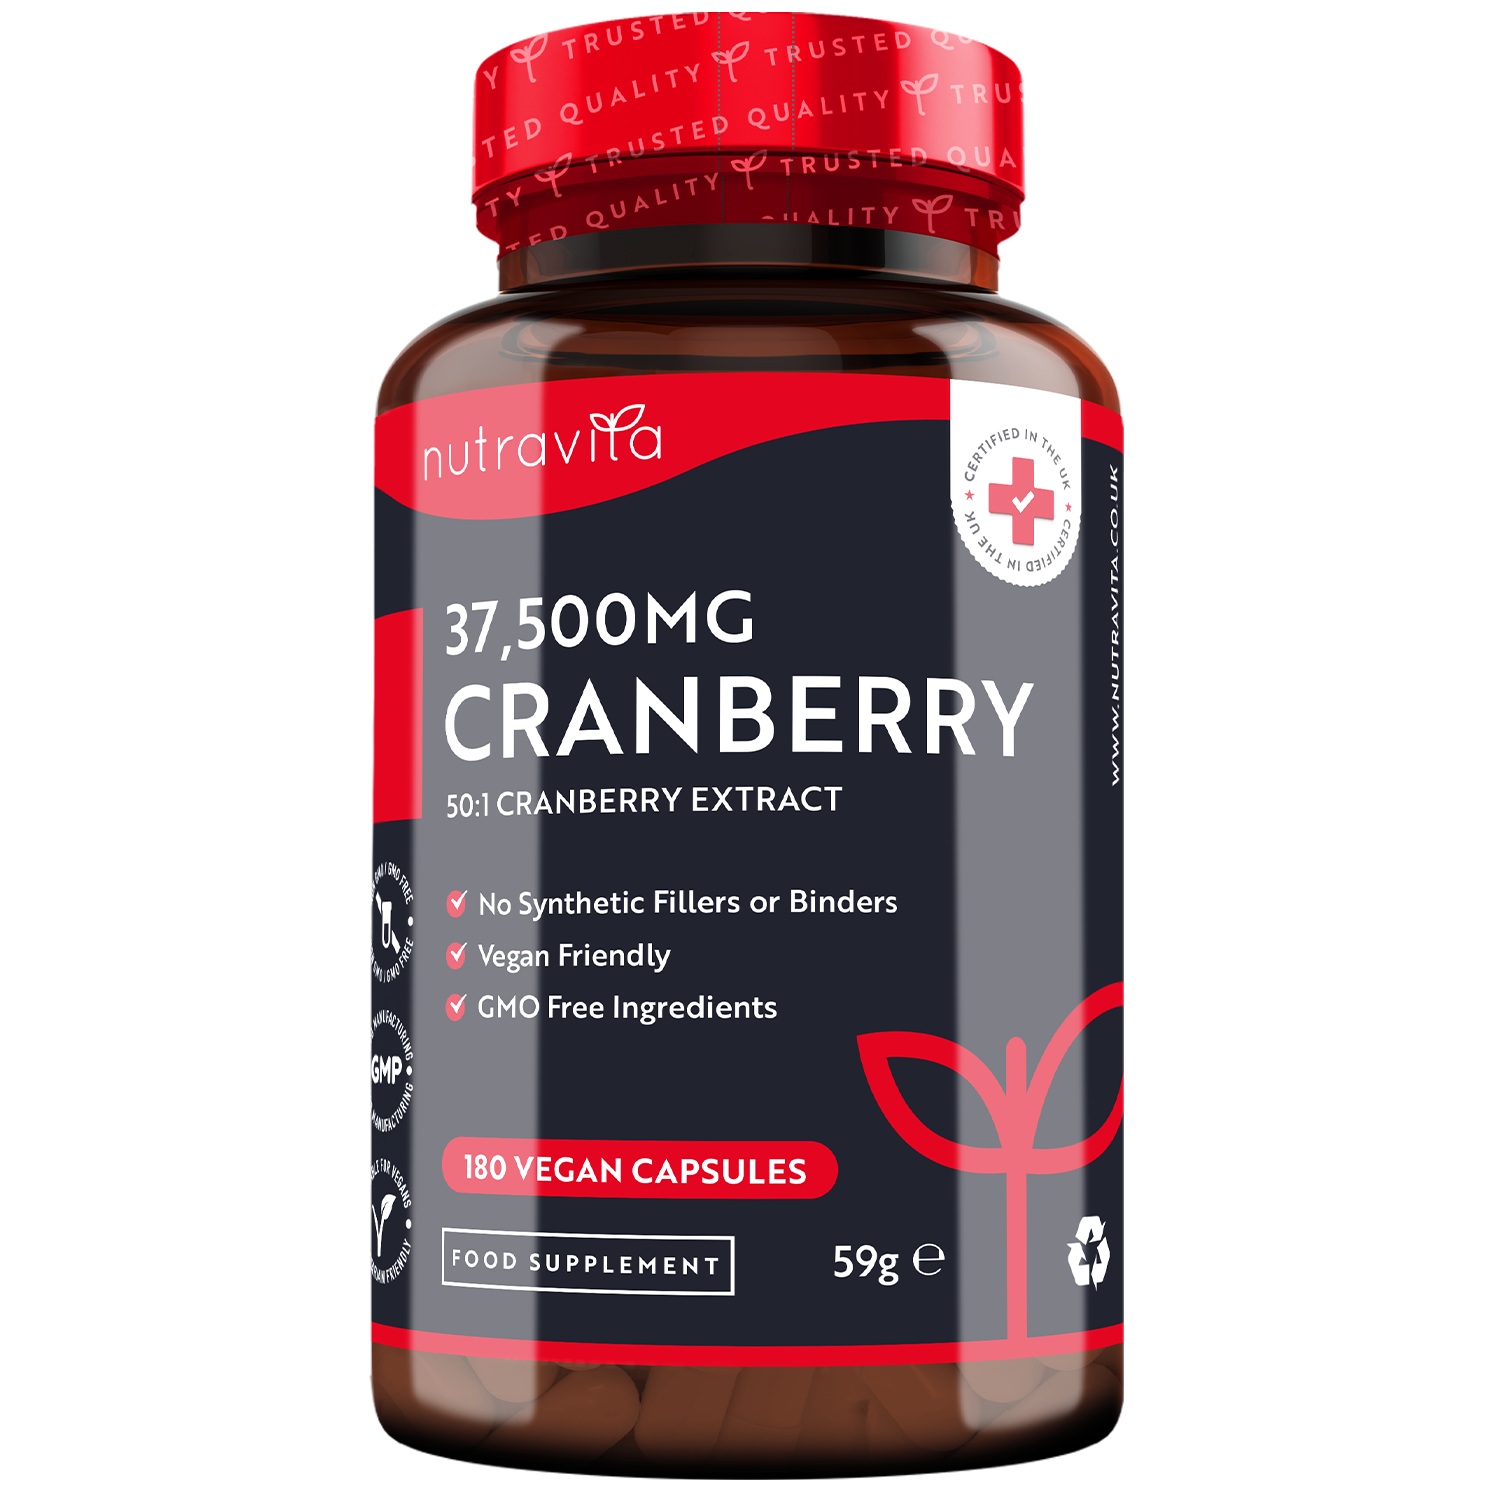 Cranberry 50:1 Extract 37,500mg 180 Vegan Capsules